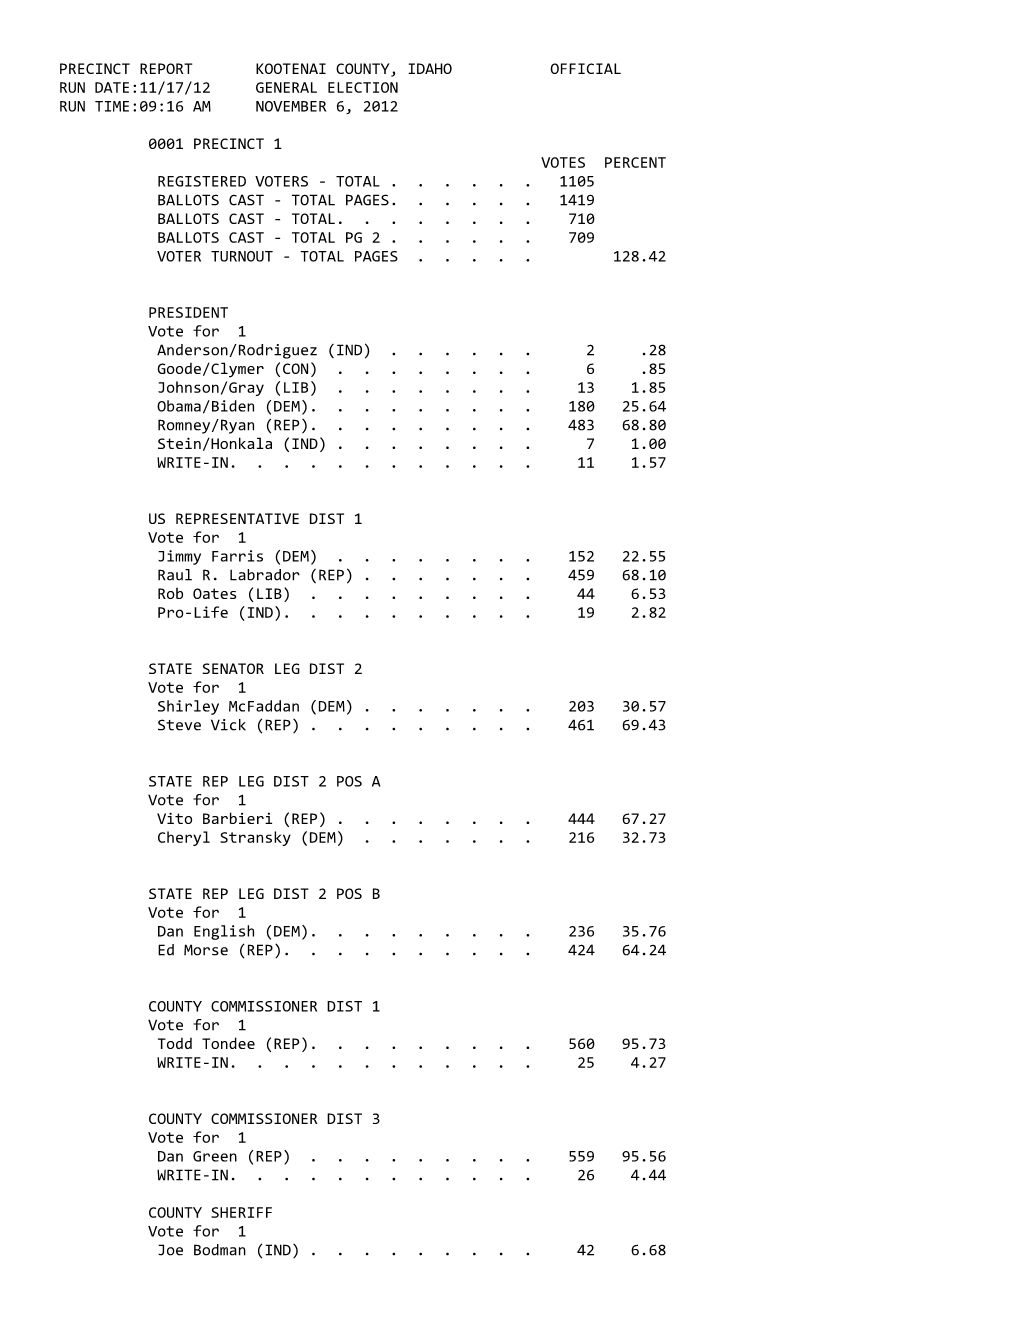 Precinct Report Kootenai County, Idaho Official Run Date:11/17/12 General Election Run Time:09:16 Am November 6, 2012